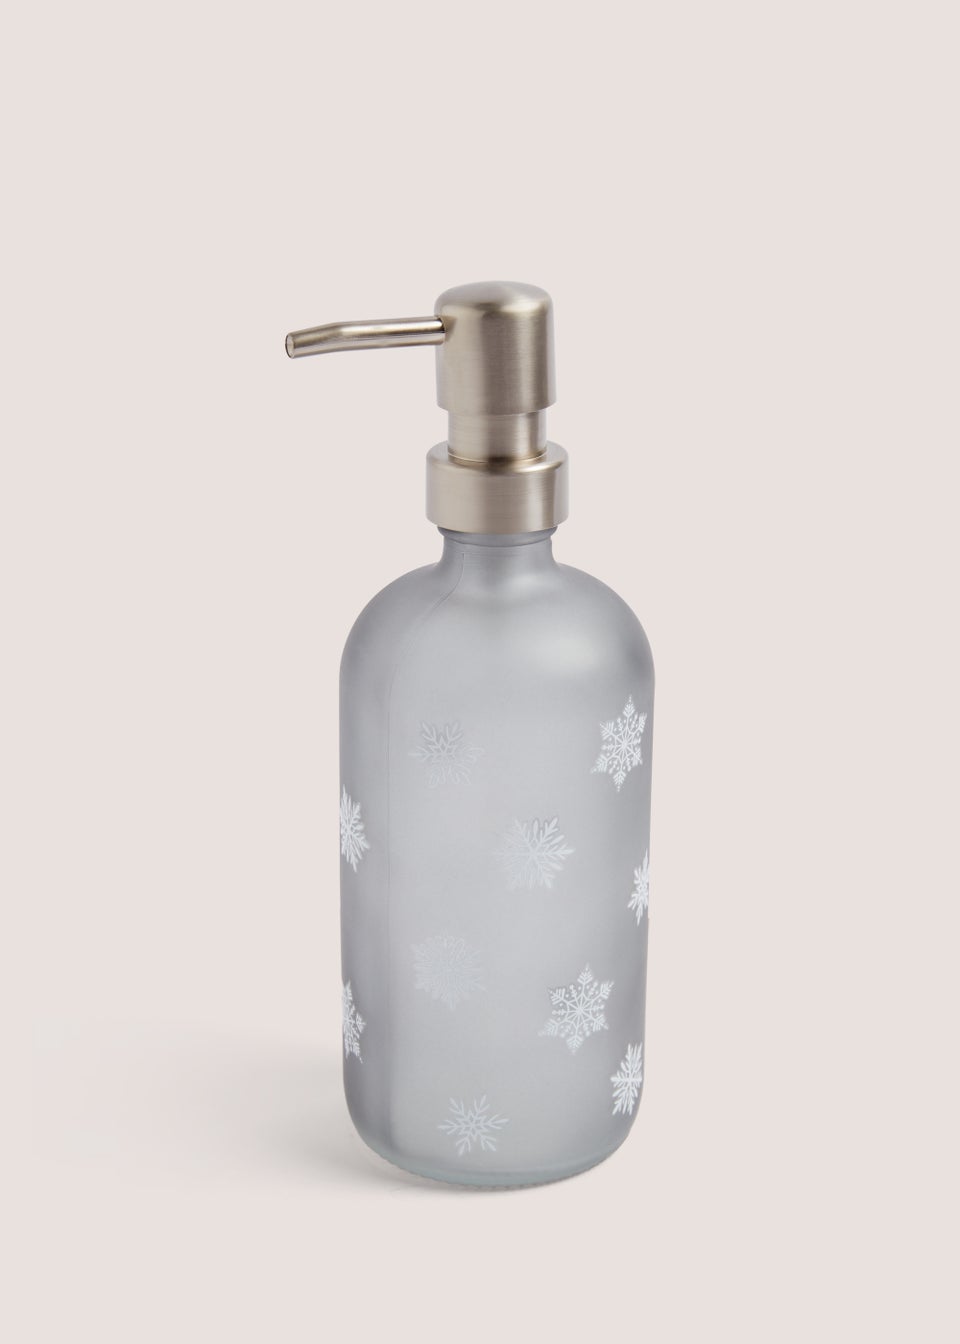 Snowflake Soap Dispenser (21cm x 6.5cm)